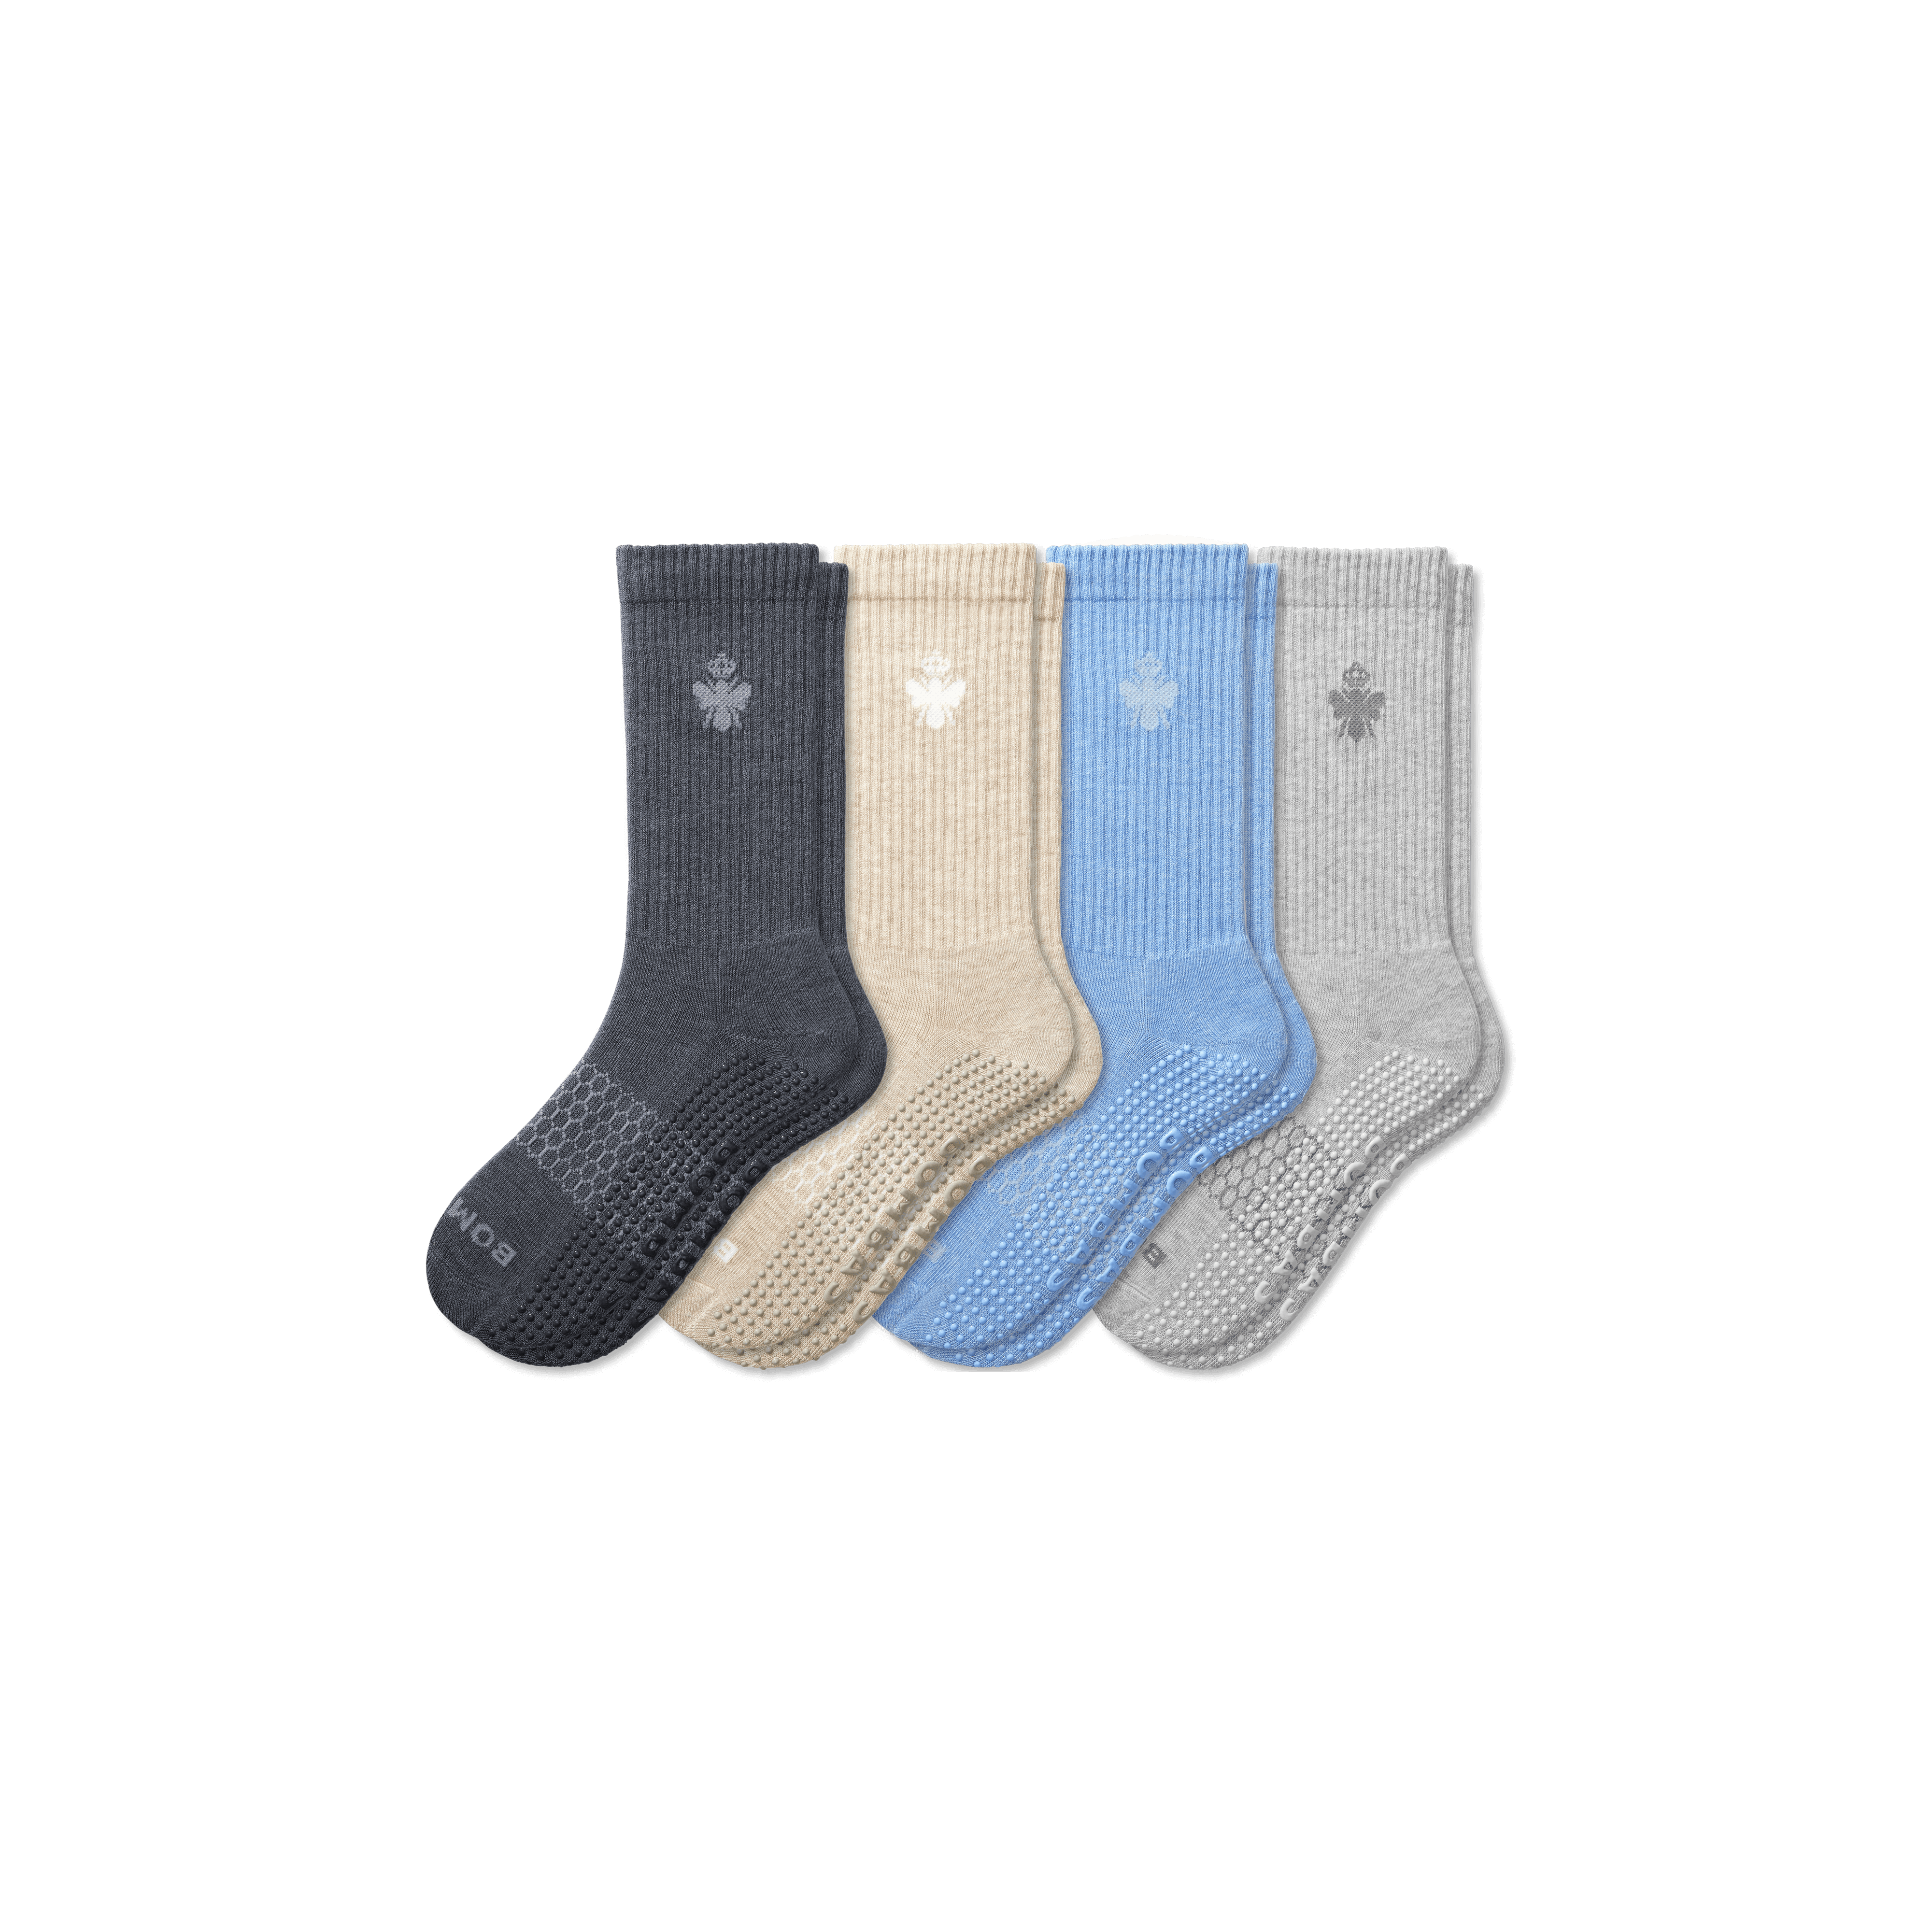 Men's Gripper Calf Socks  Calf socks, Calves, Mint blue